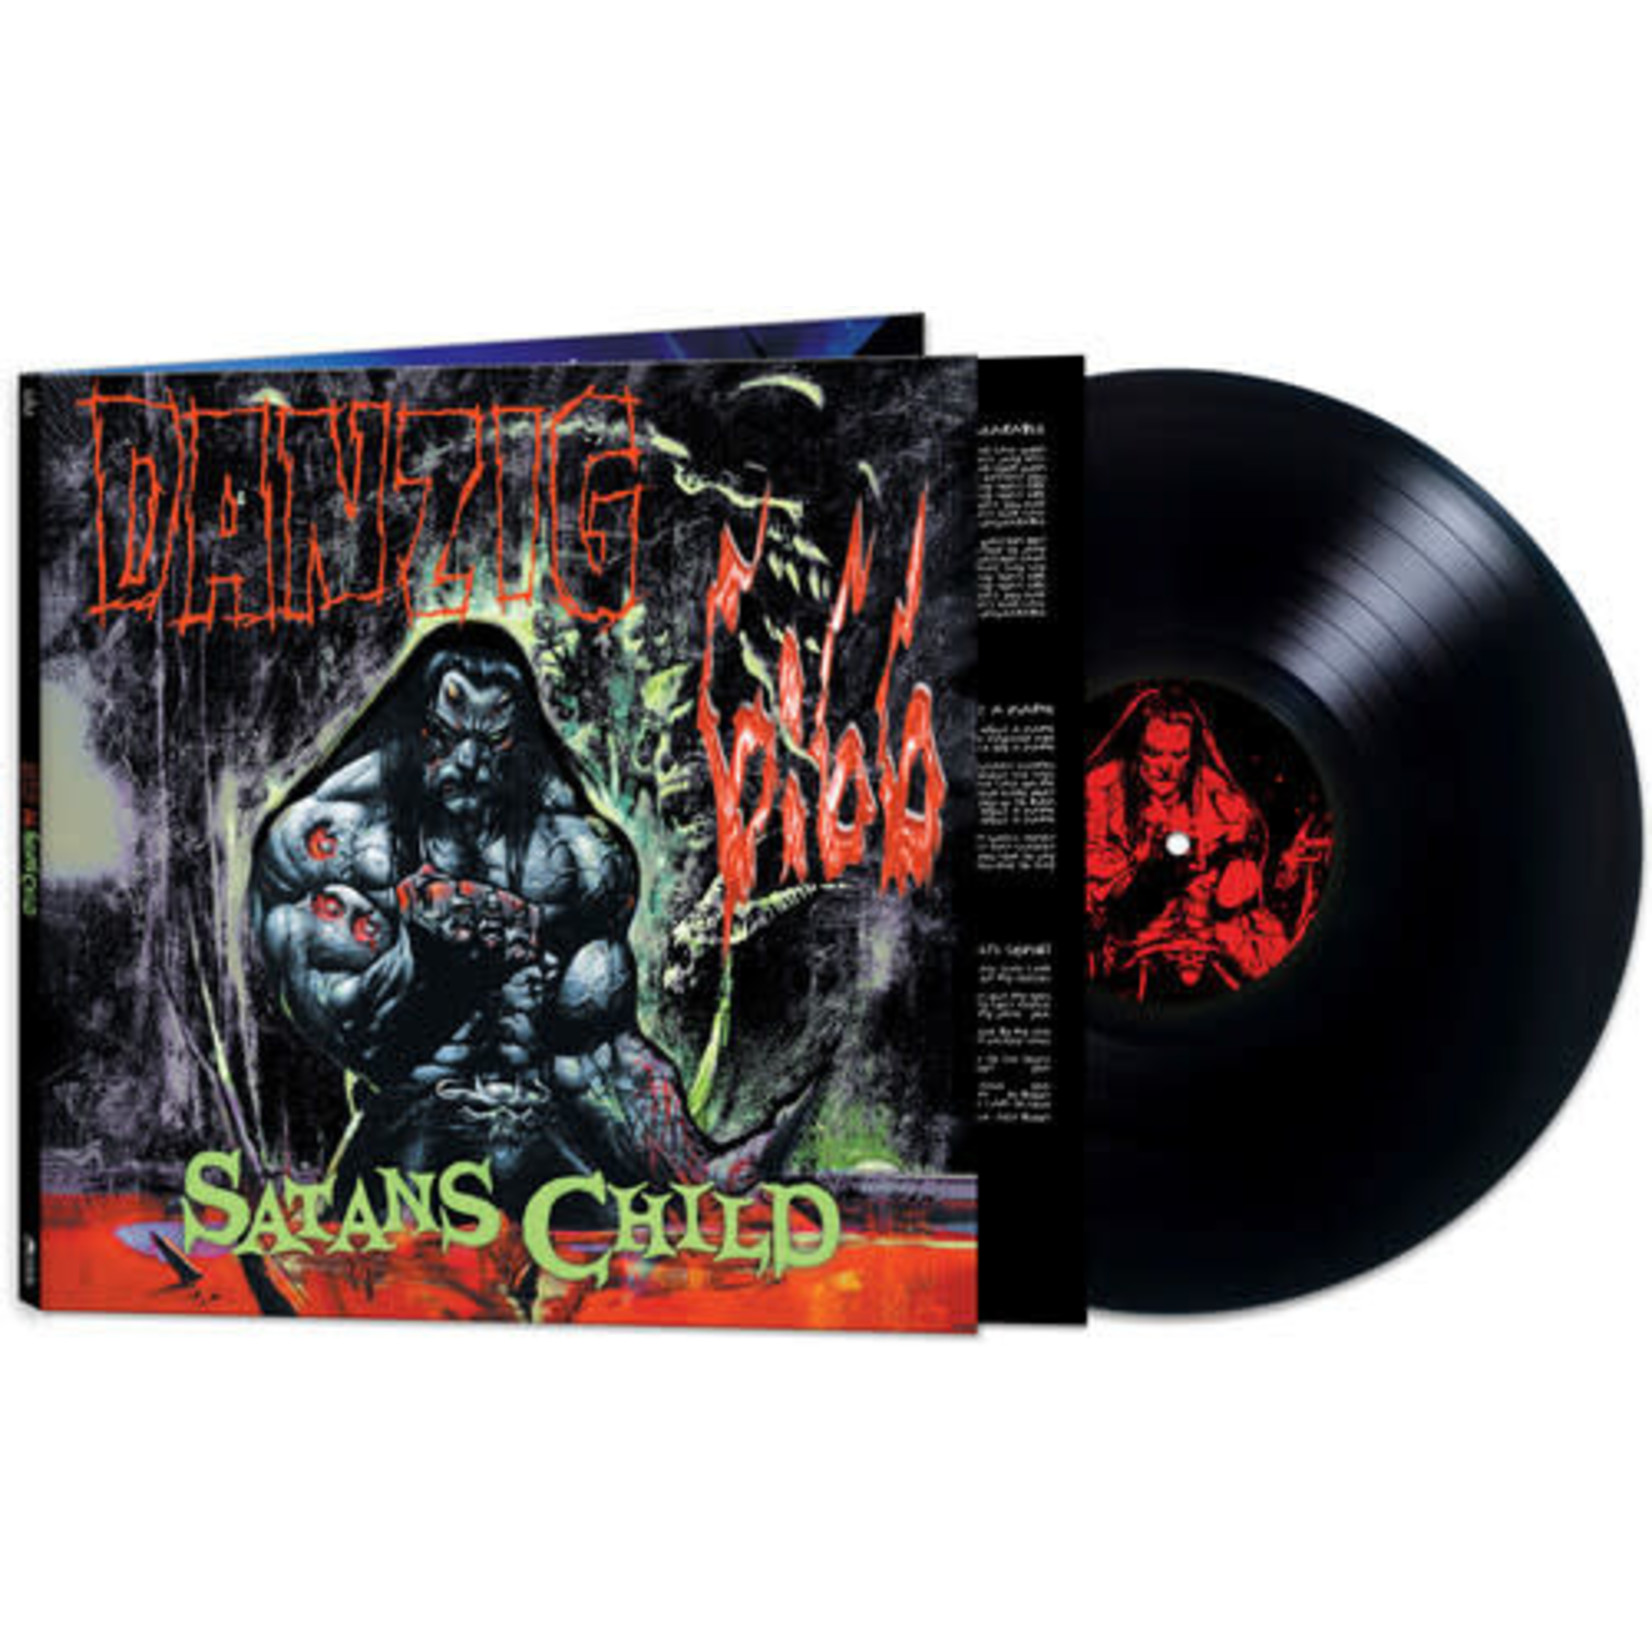 [New] Danzig - 6:66: Satan's Child (black vinyl)